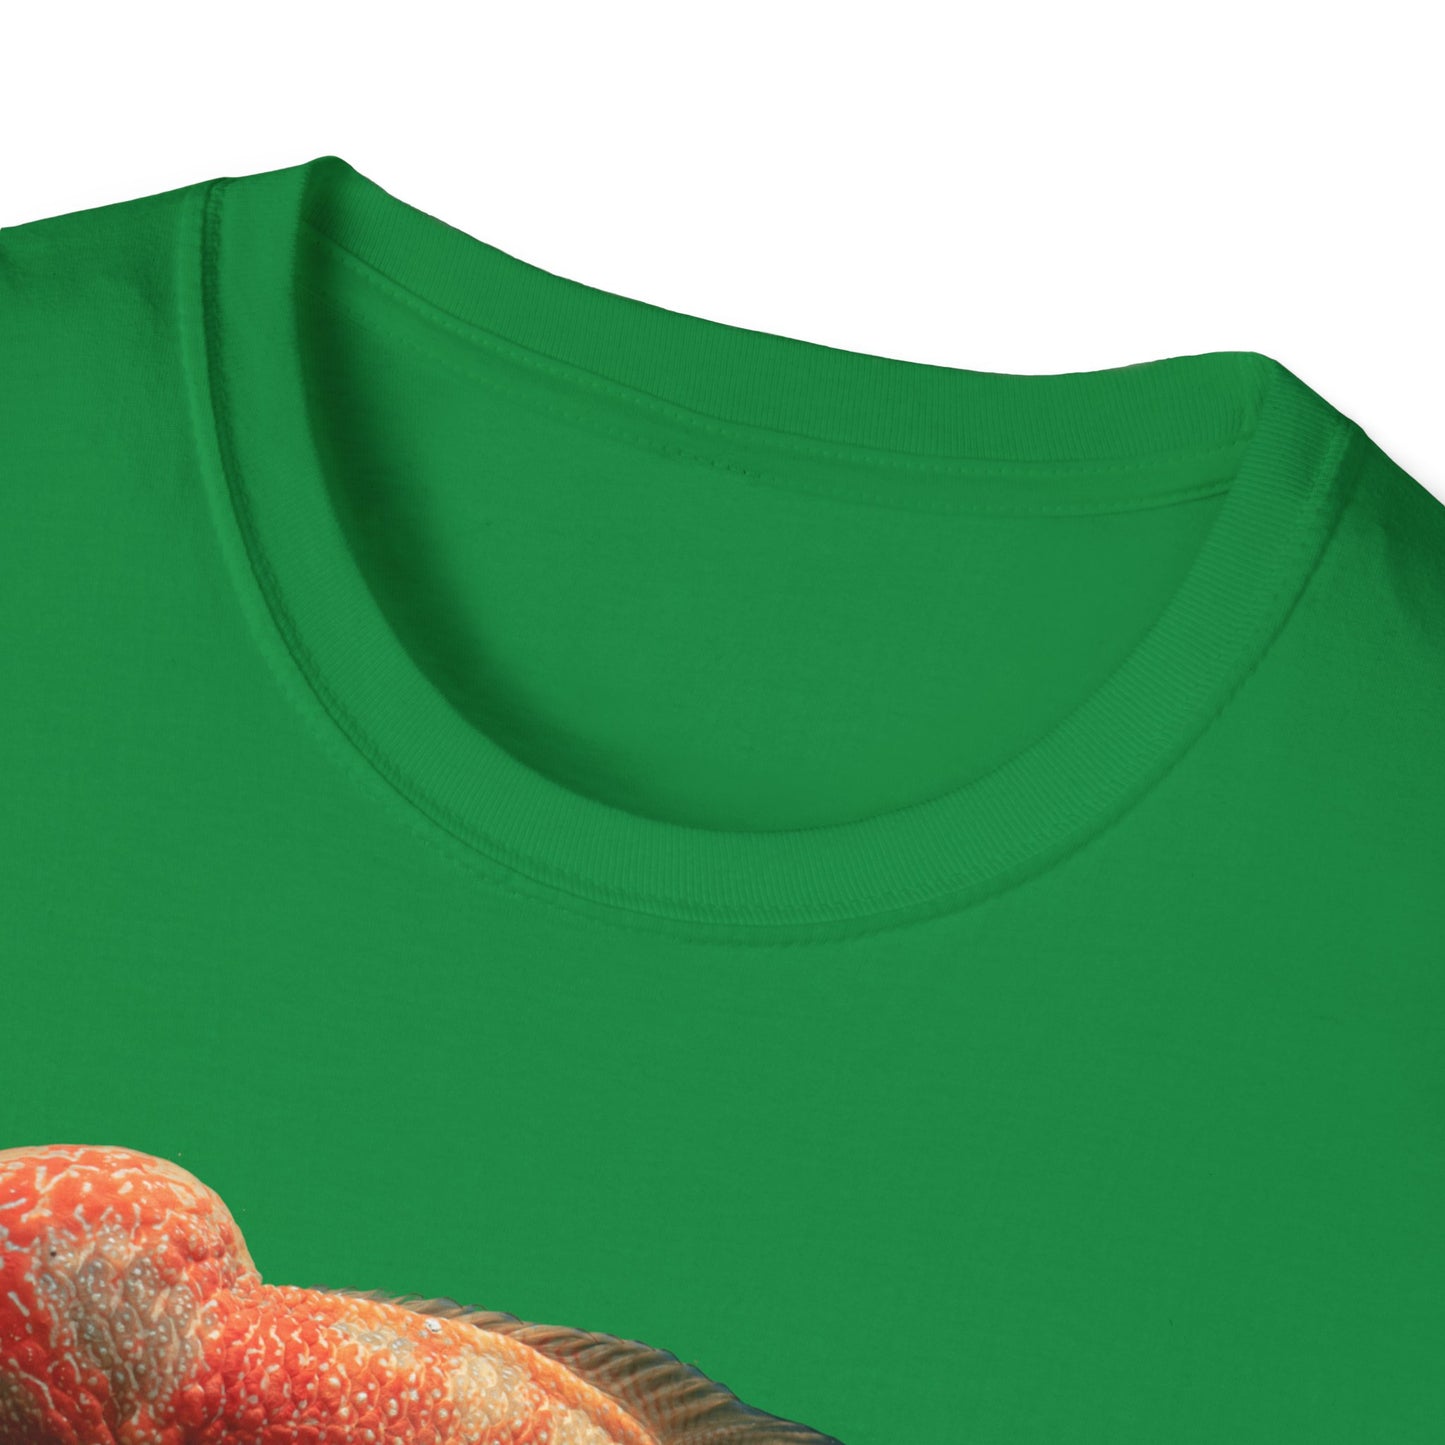 Flowerhorn Wise Guy Unisex Softstyle T-Shirt by ADHD Aquatics